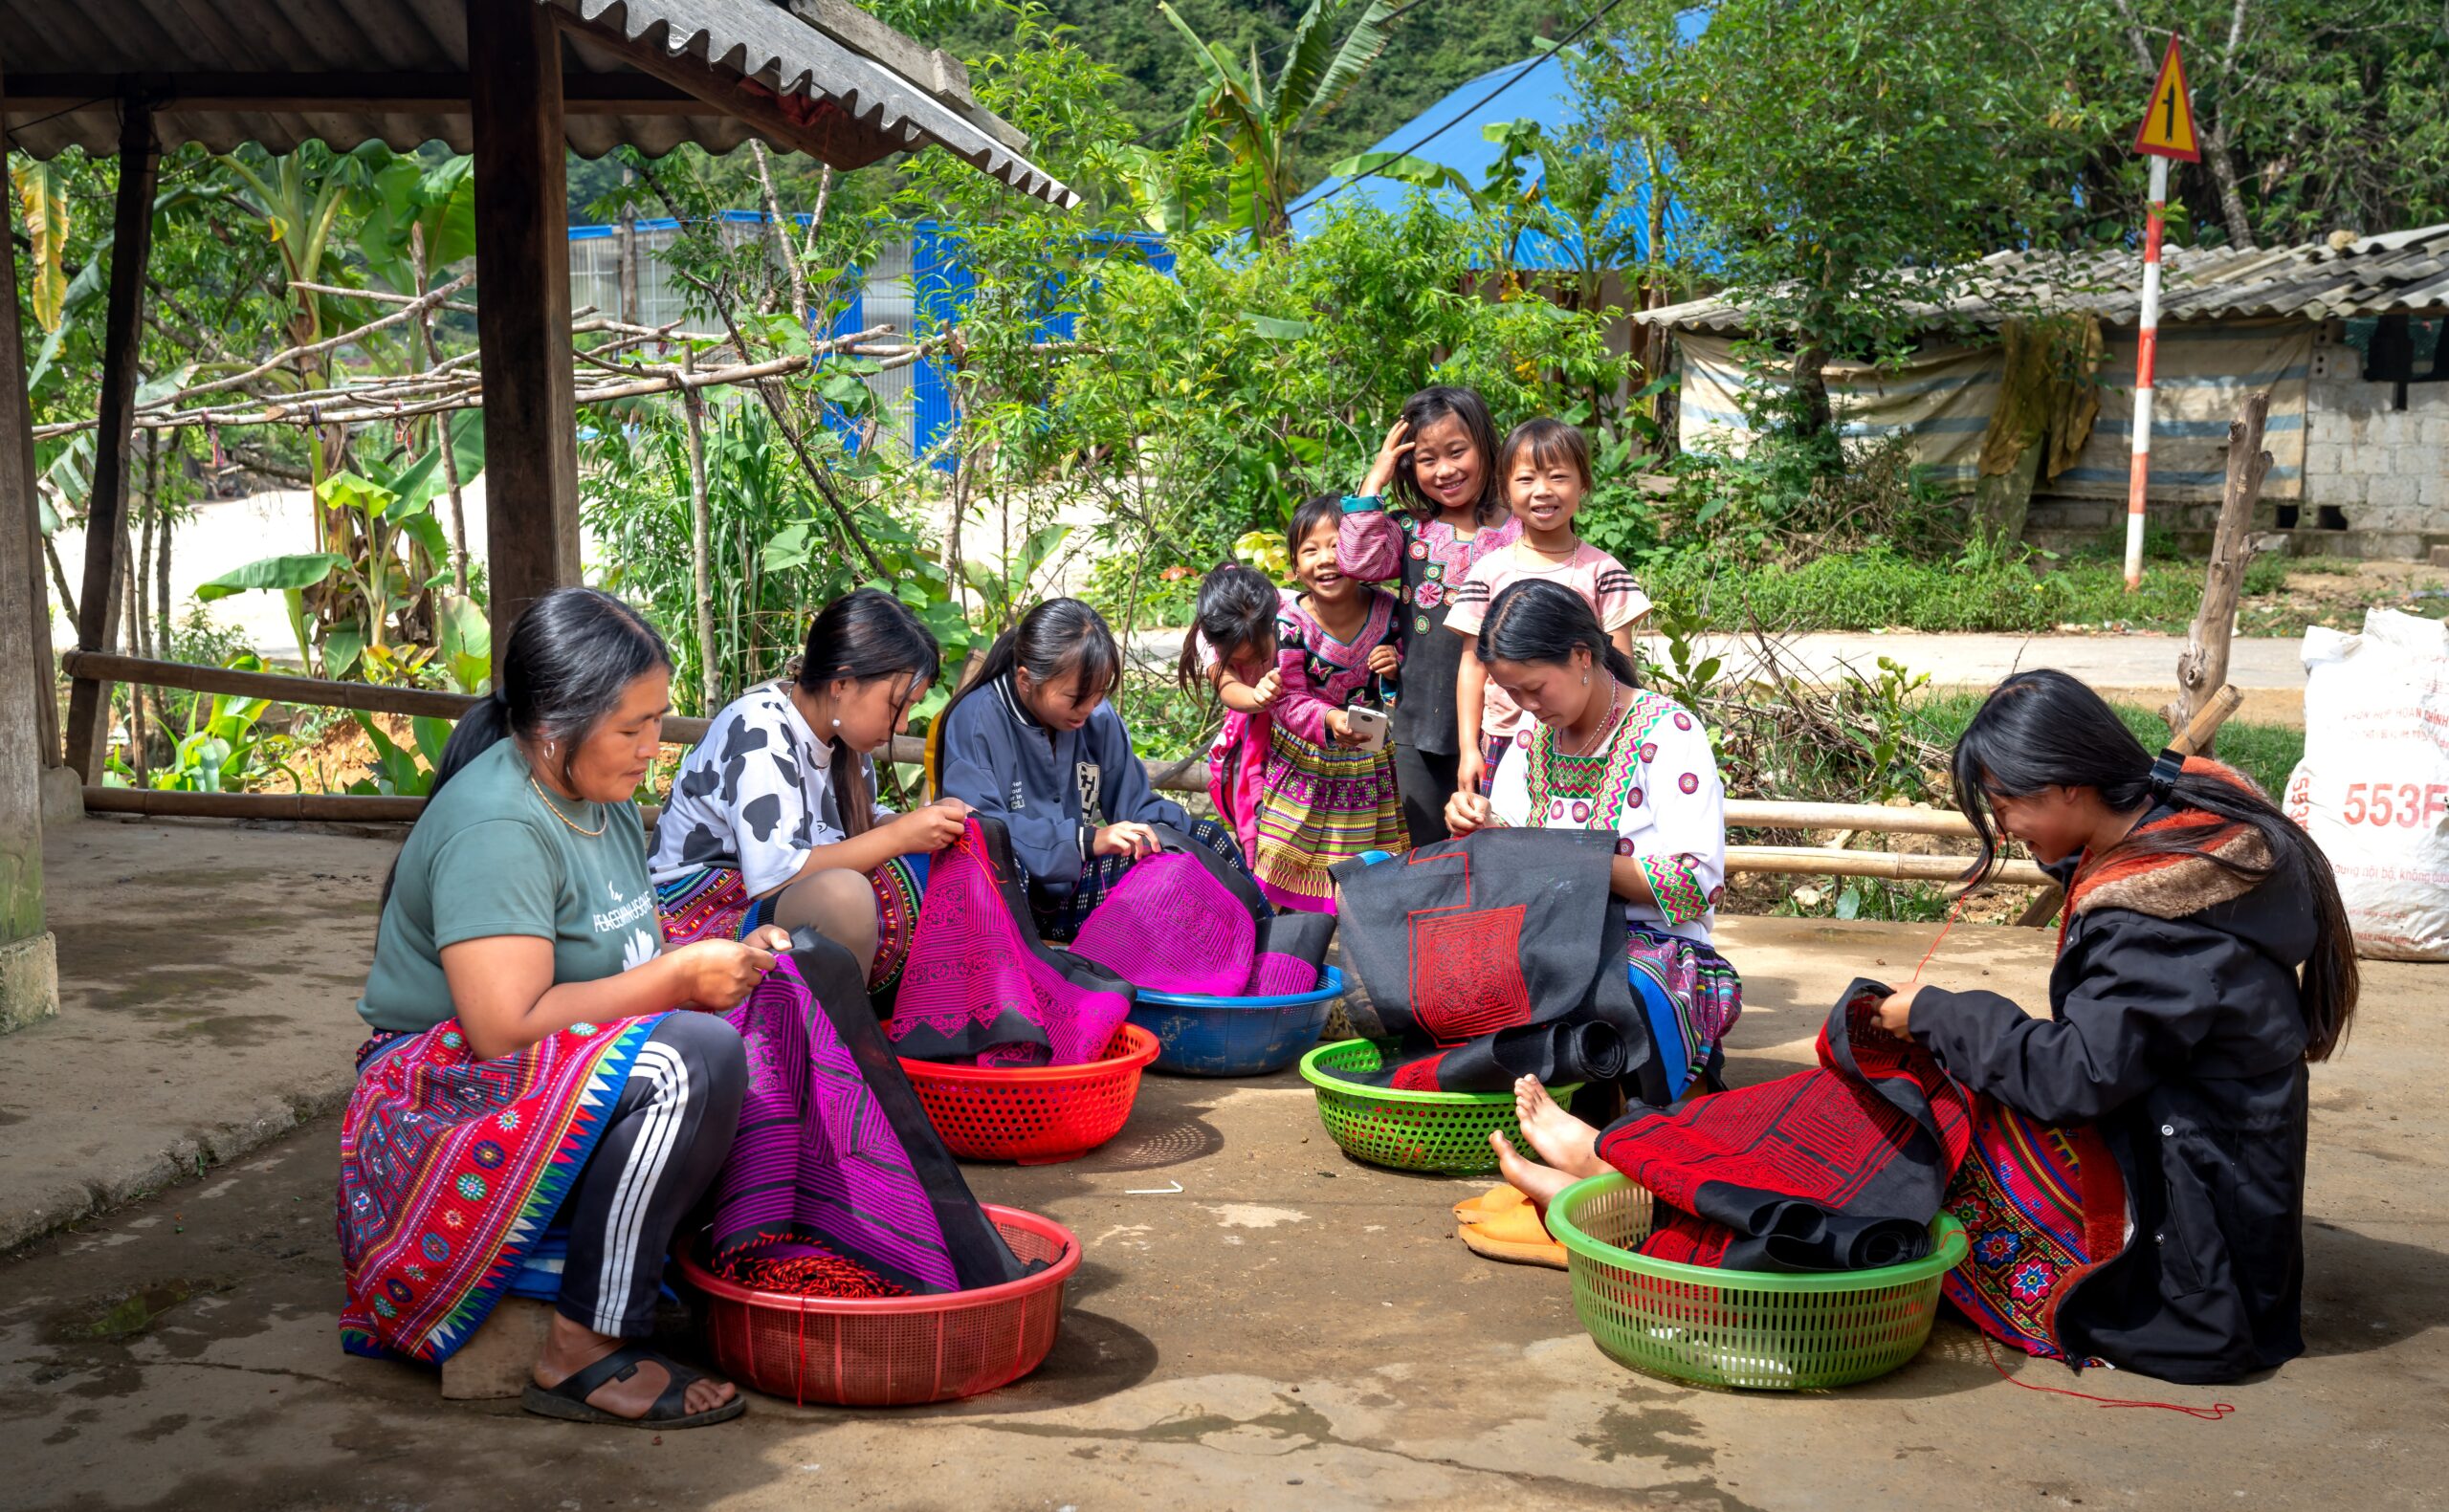 Local artisans Vietnam